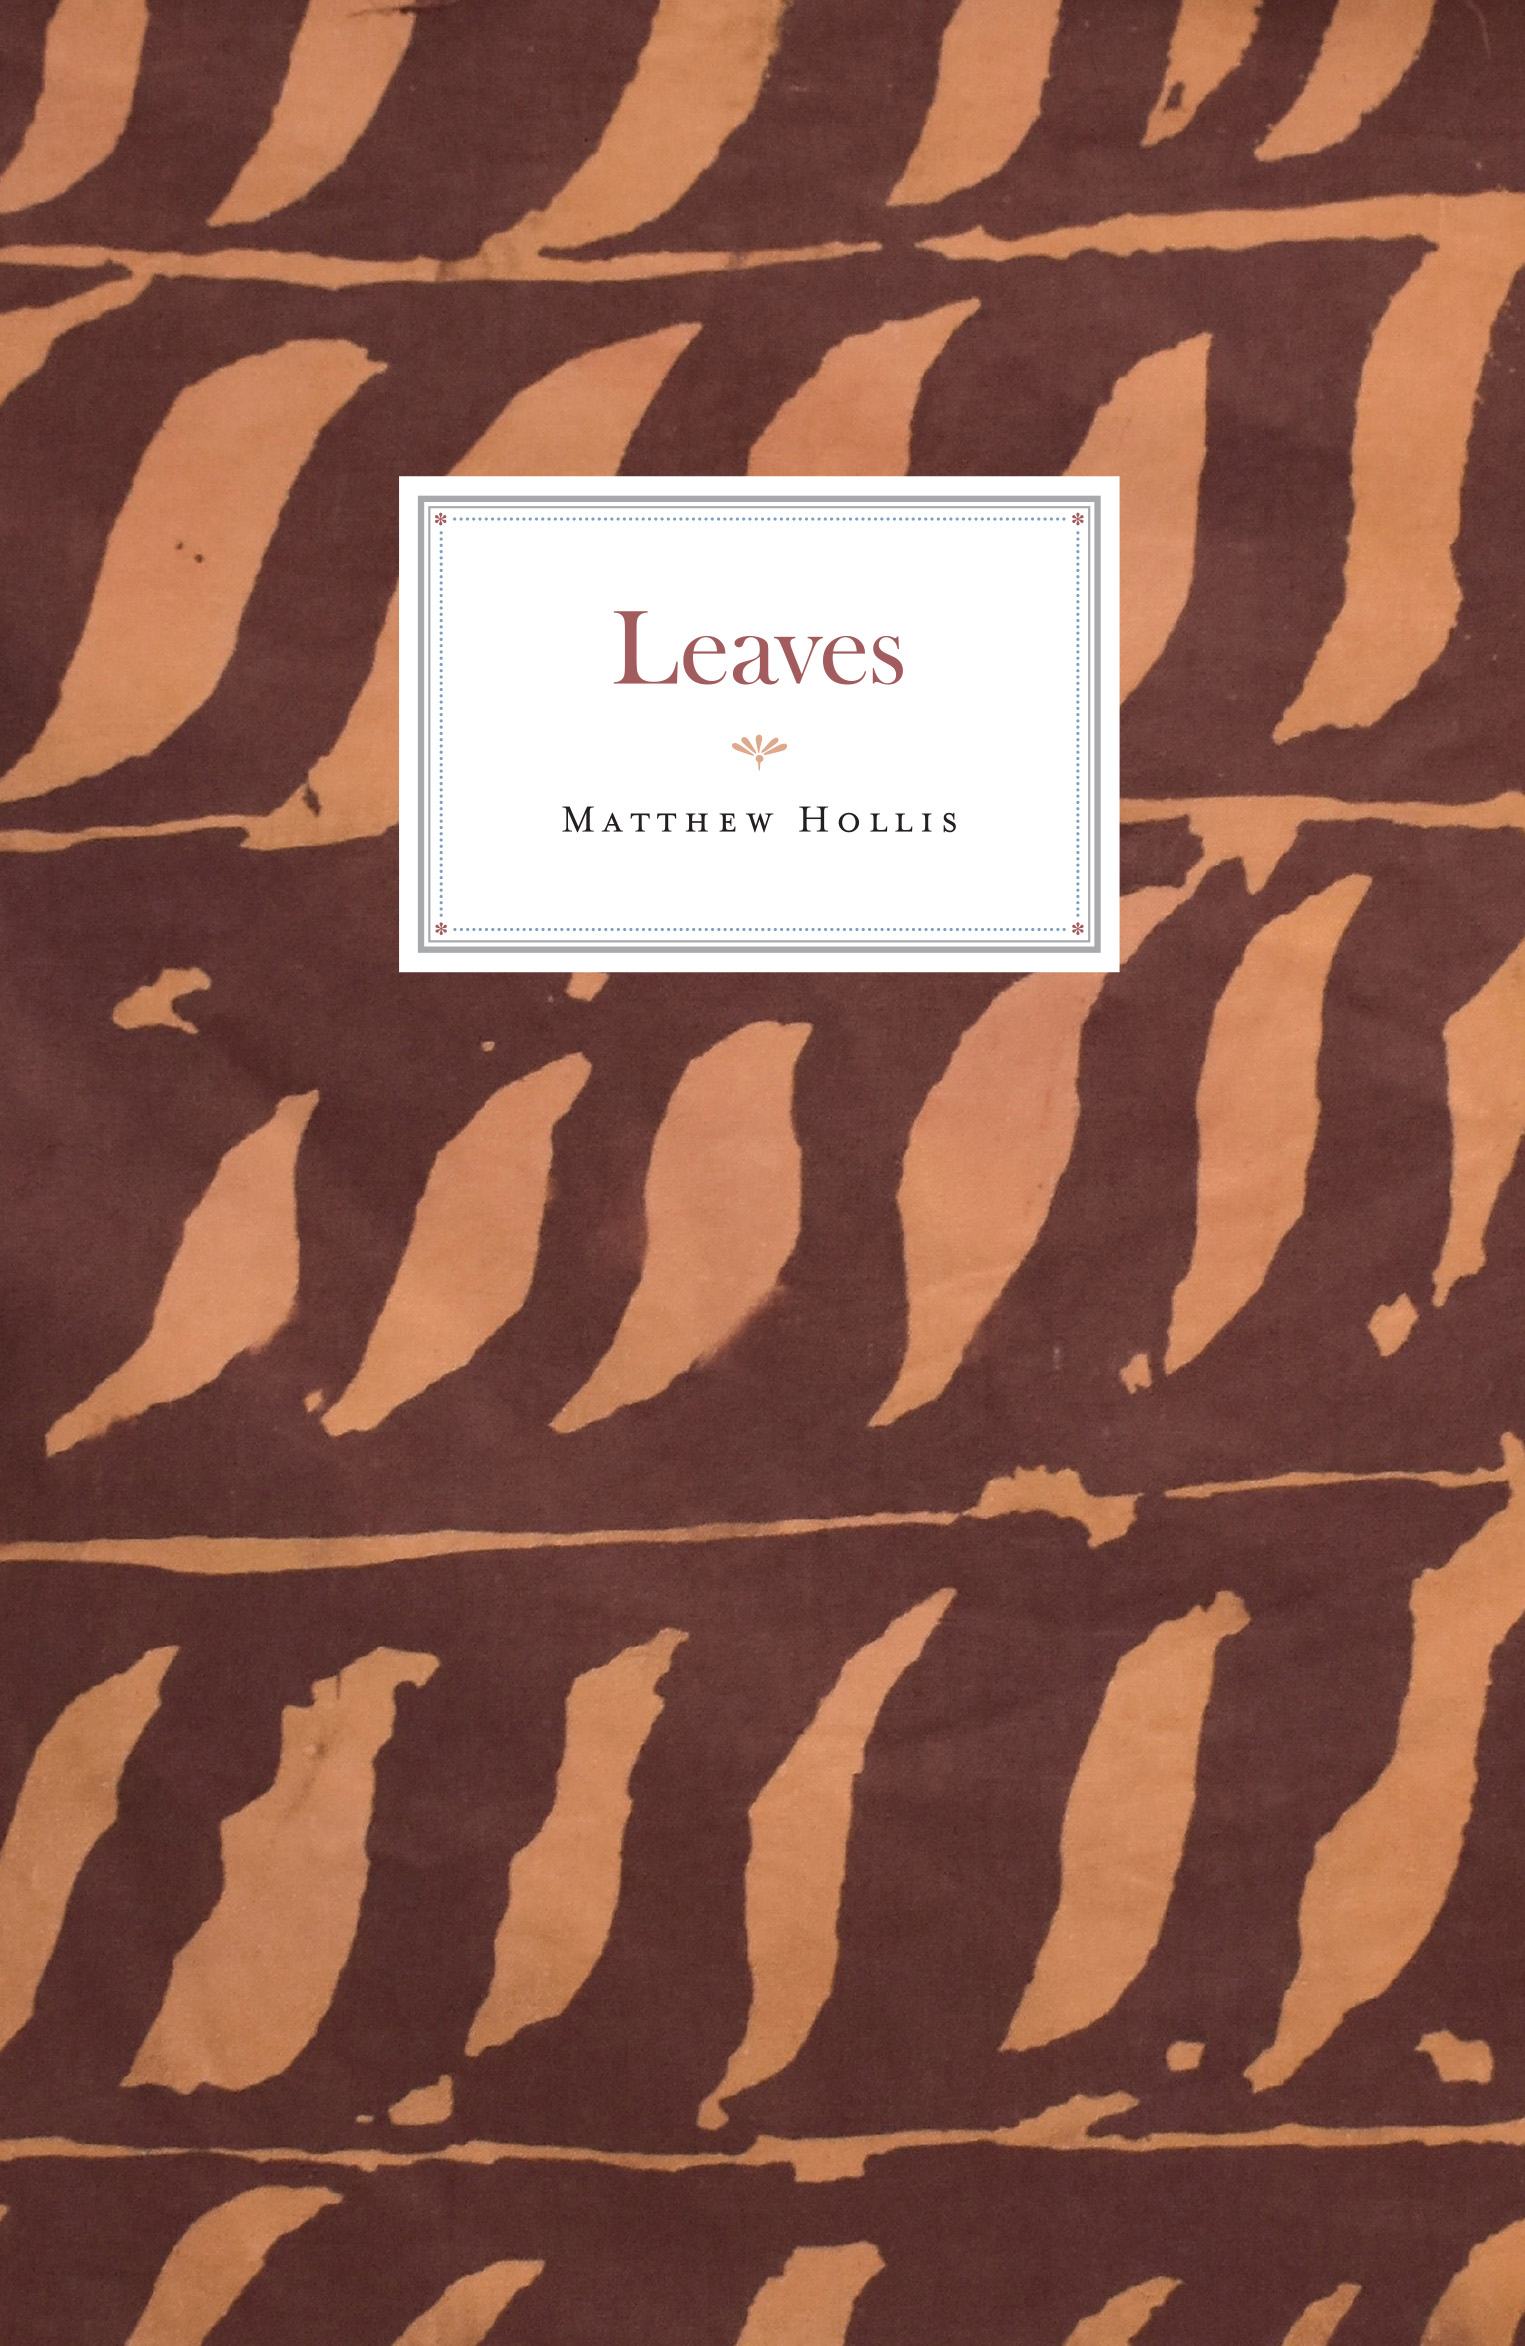 Leaves, Matthew Hollis. Ebook format only